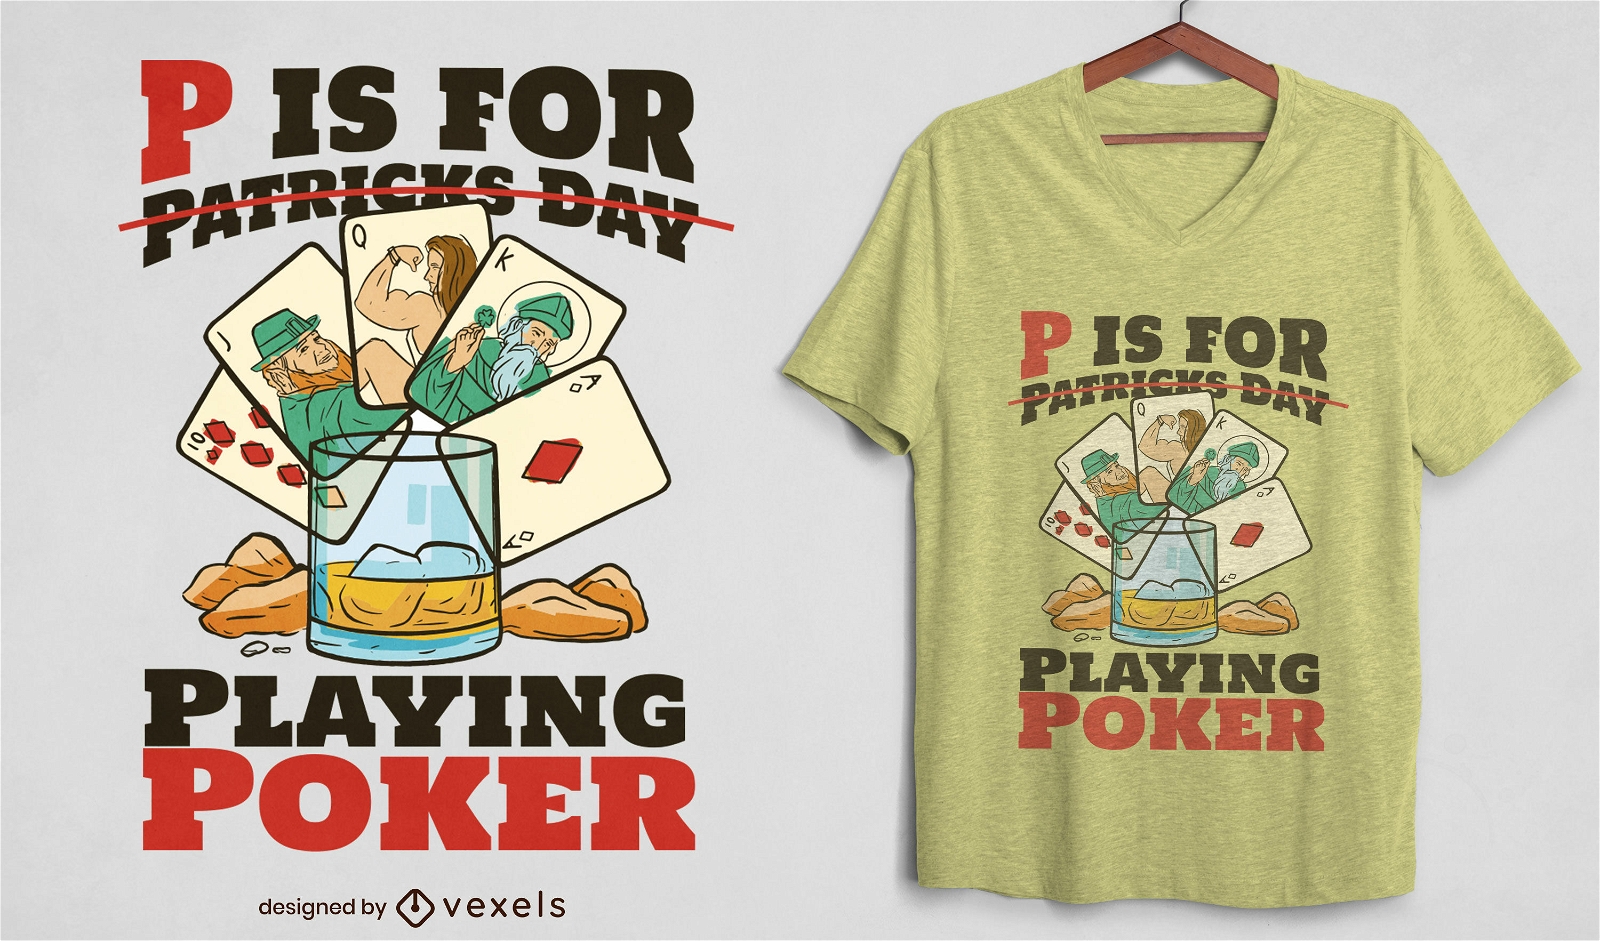 Patrick's Day playing poker t-shirt design